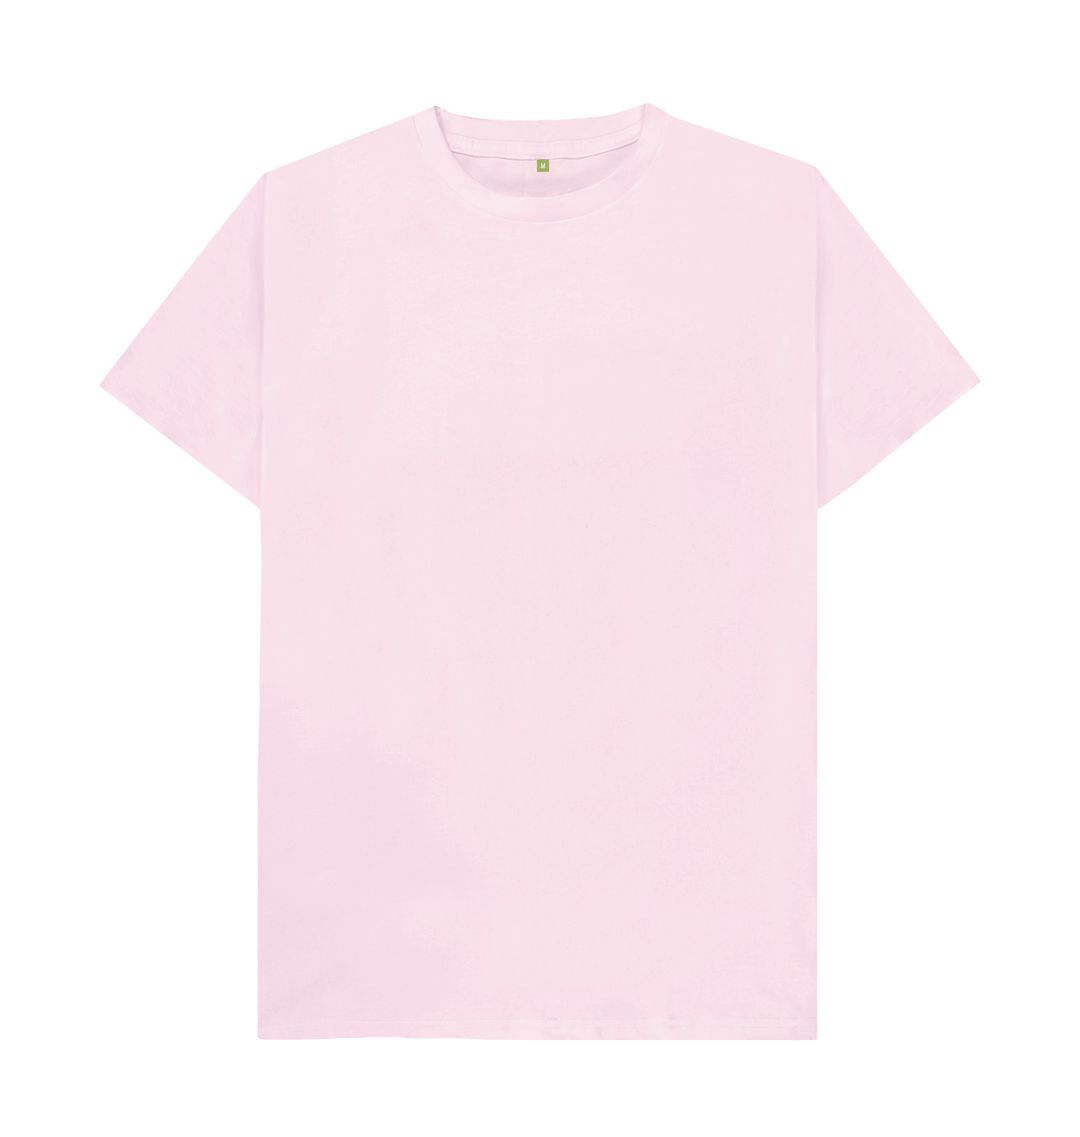 Pink Men's organic cotton t-shirt